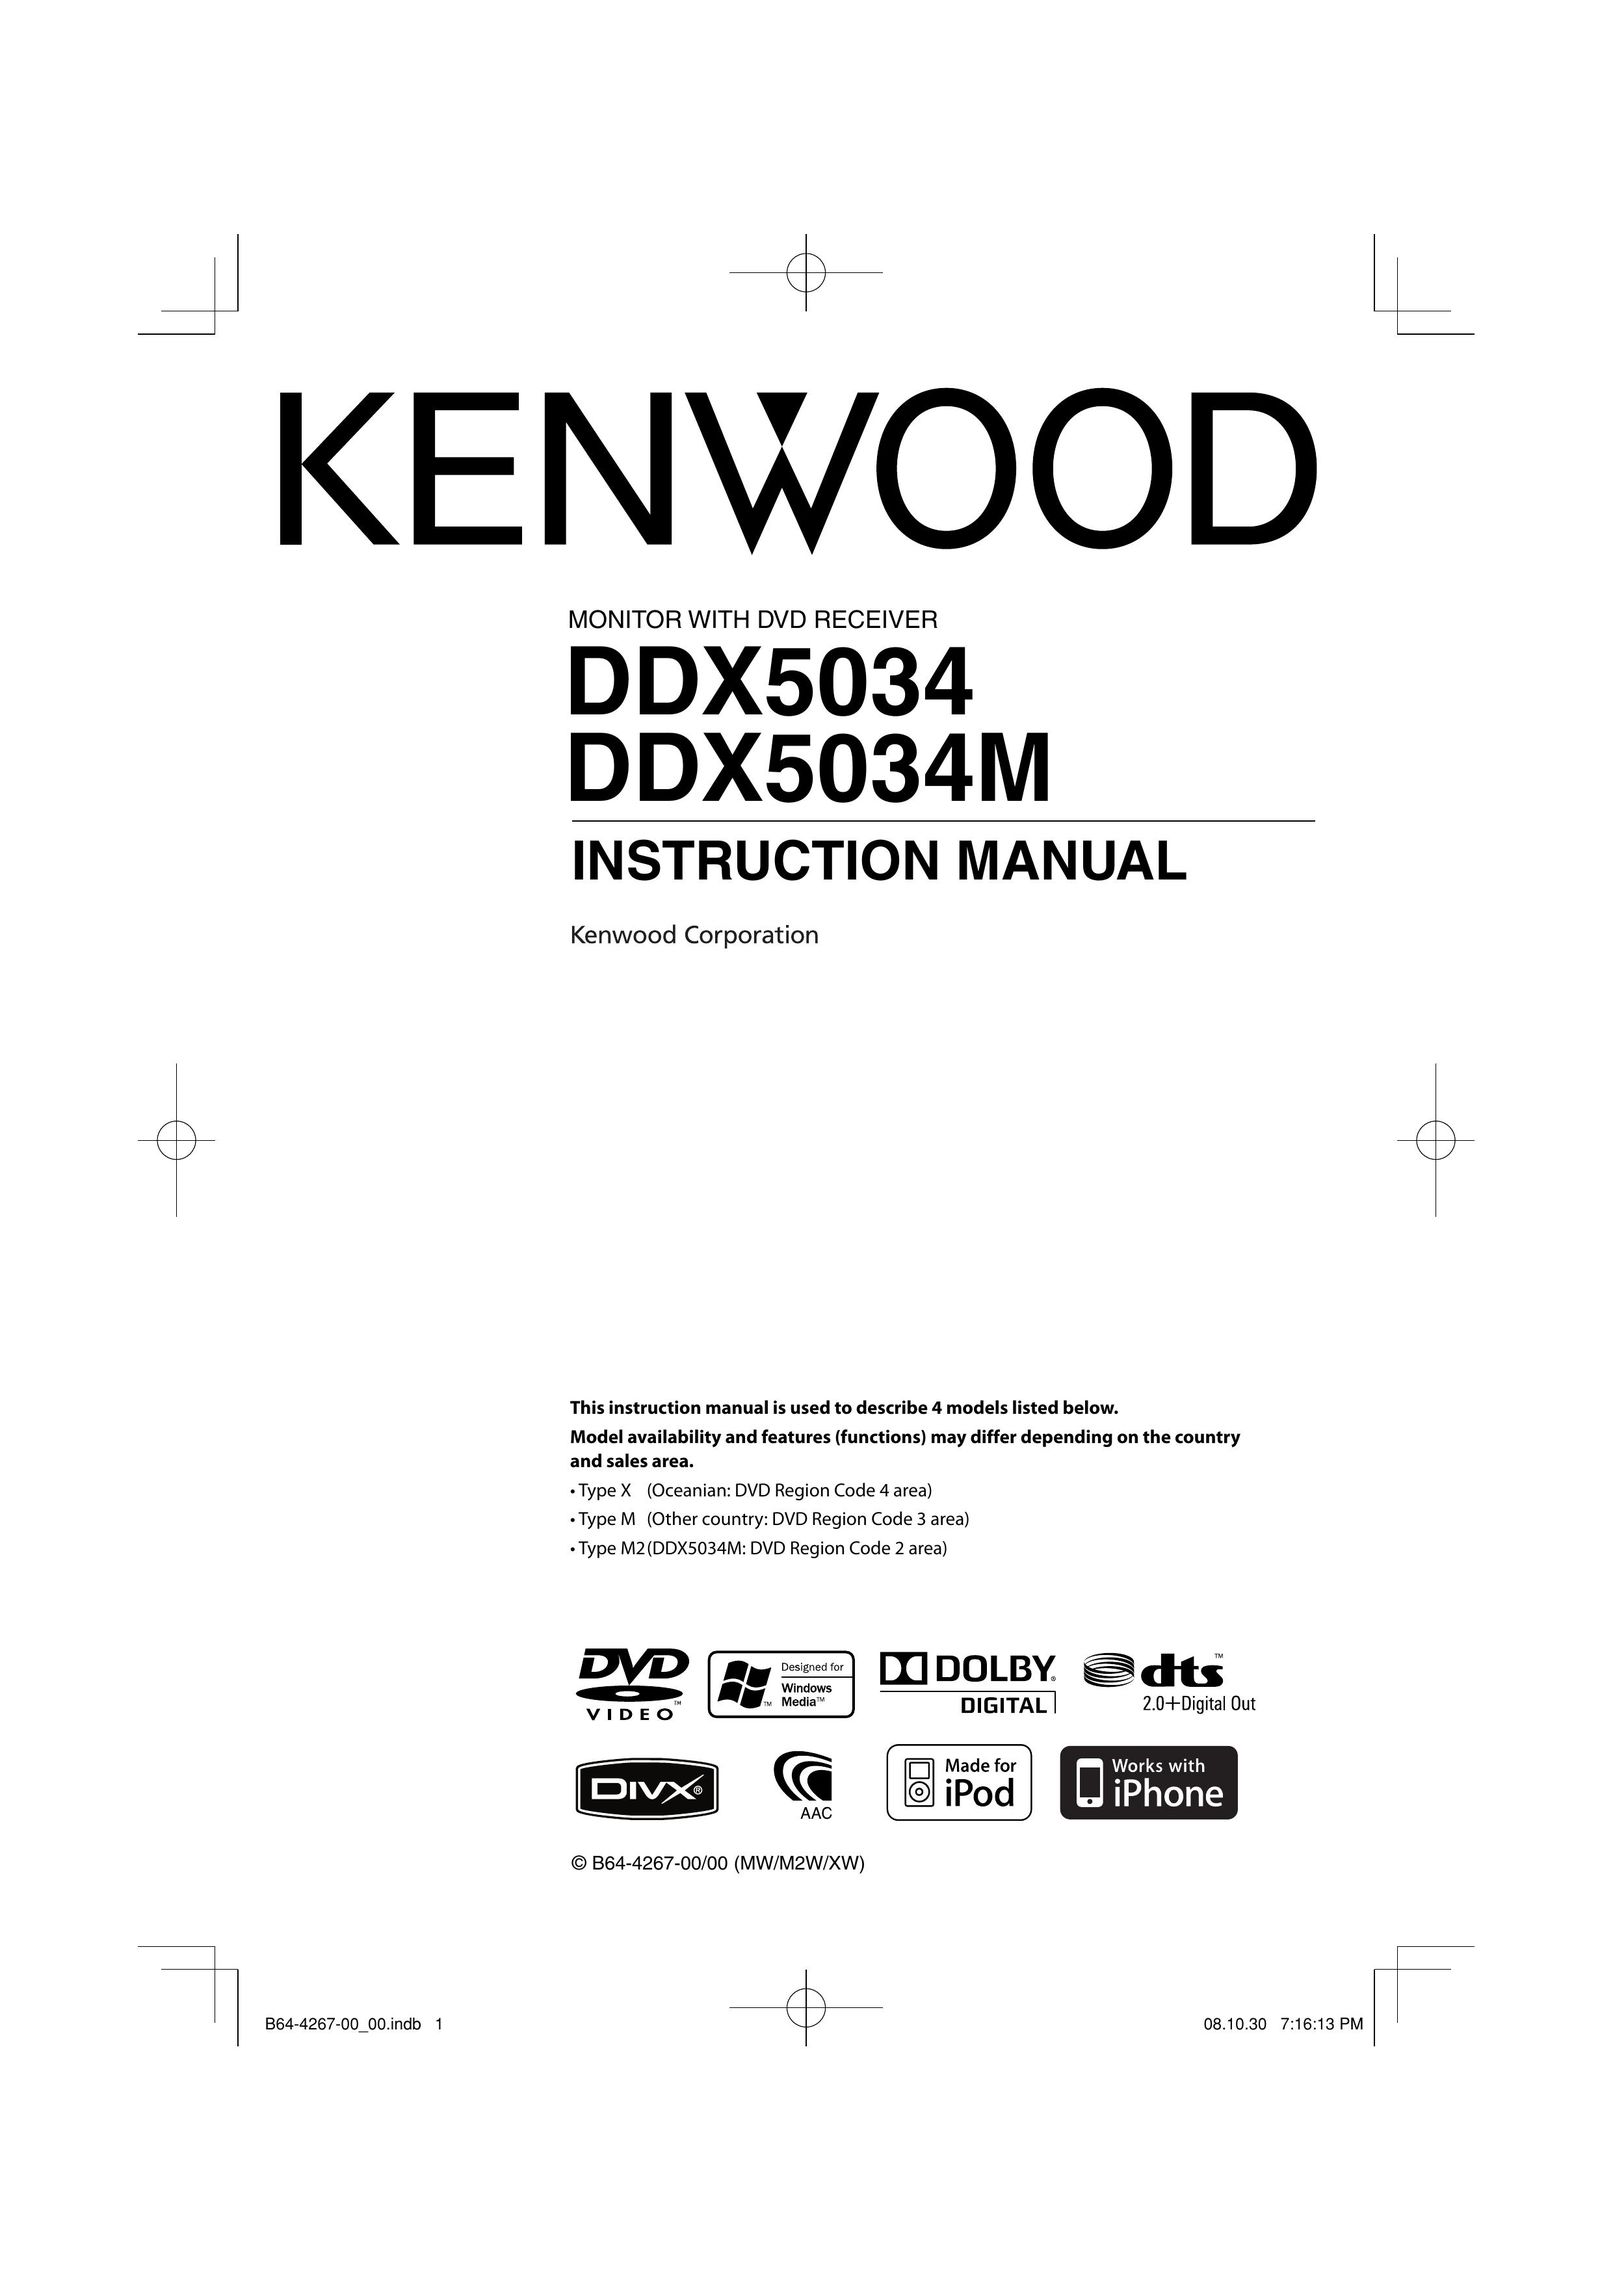 Kenwood DDX5034M Car Video System User Manual